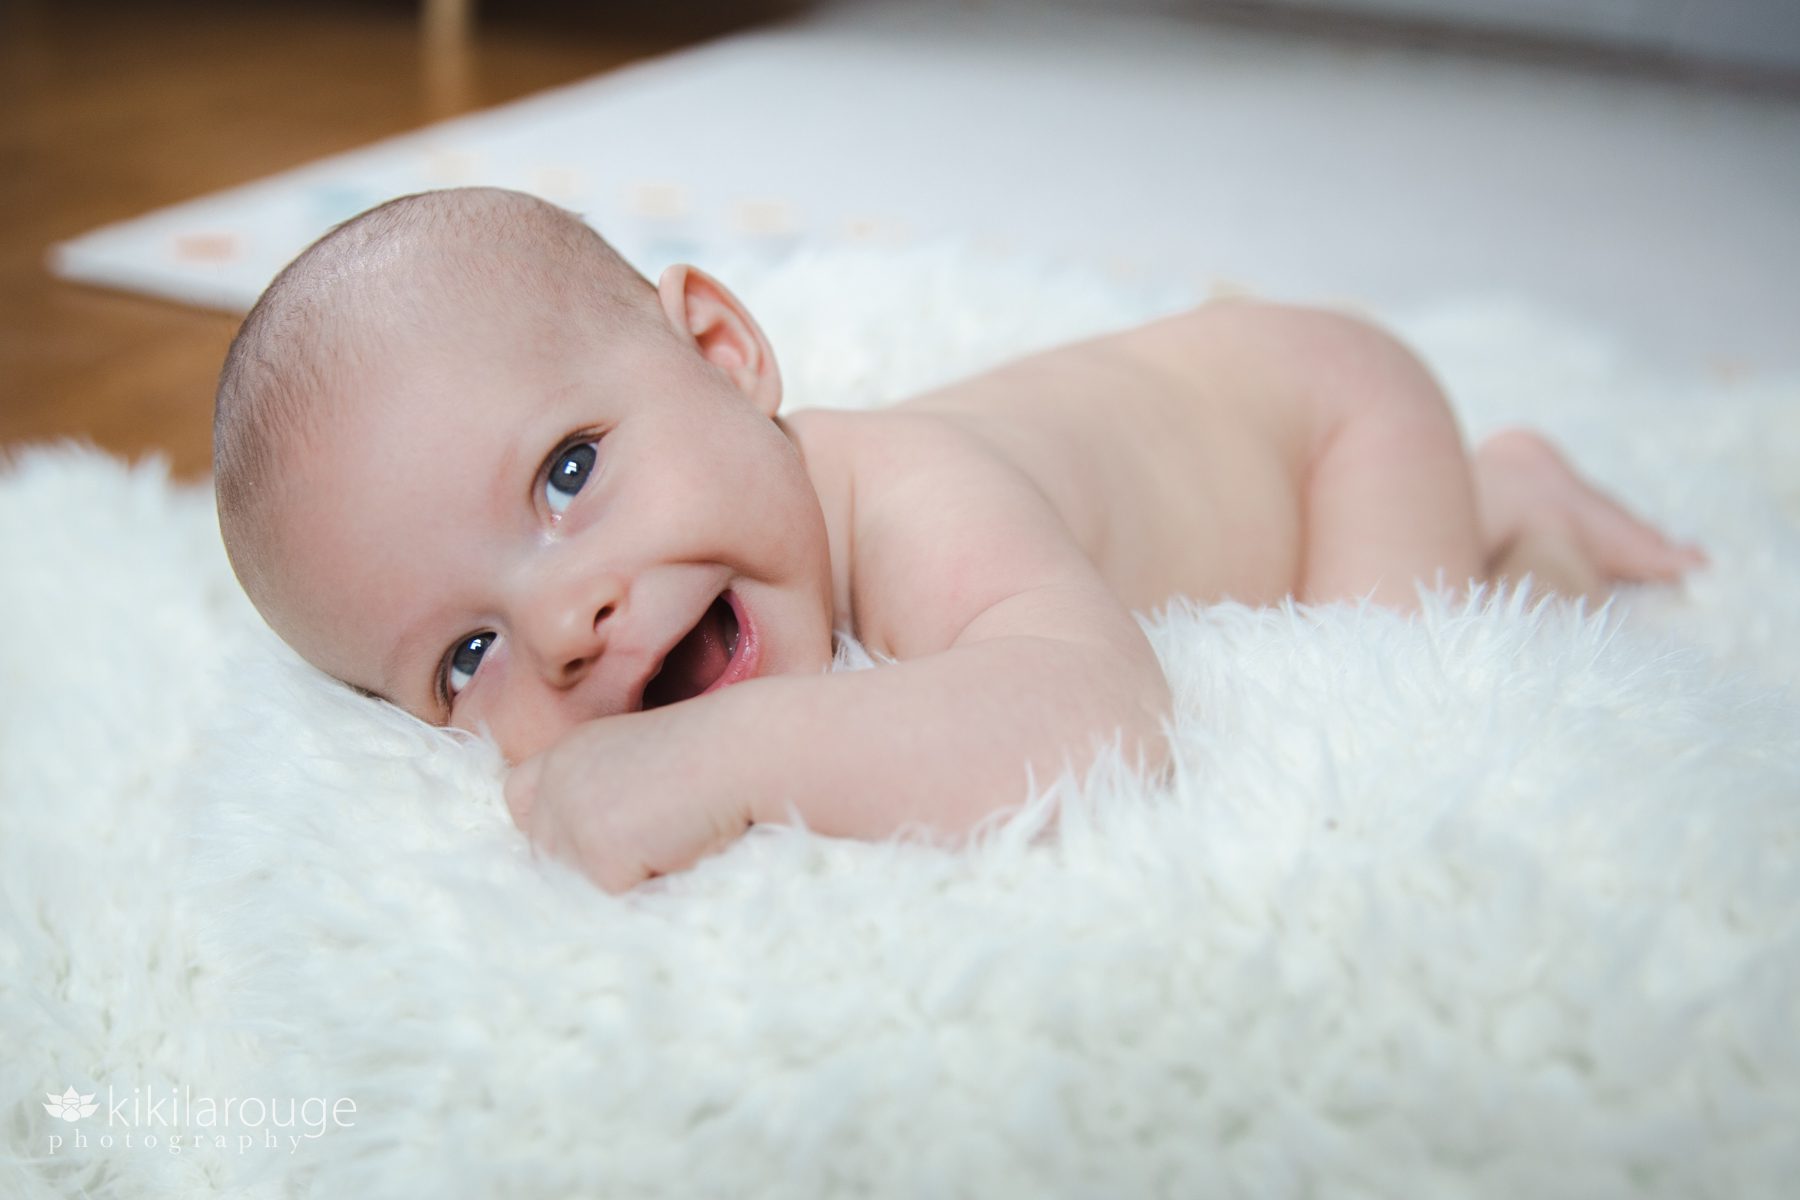 Naked Smiling baby in plush white blanket